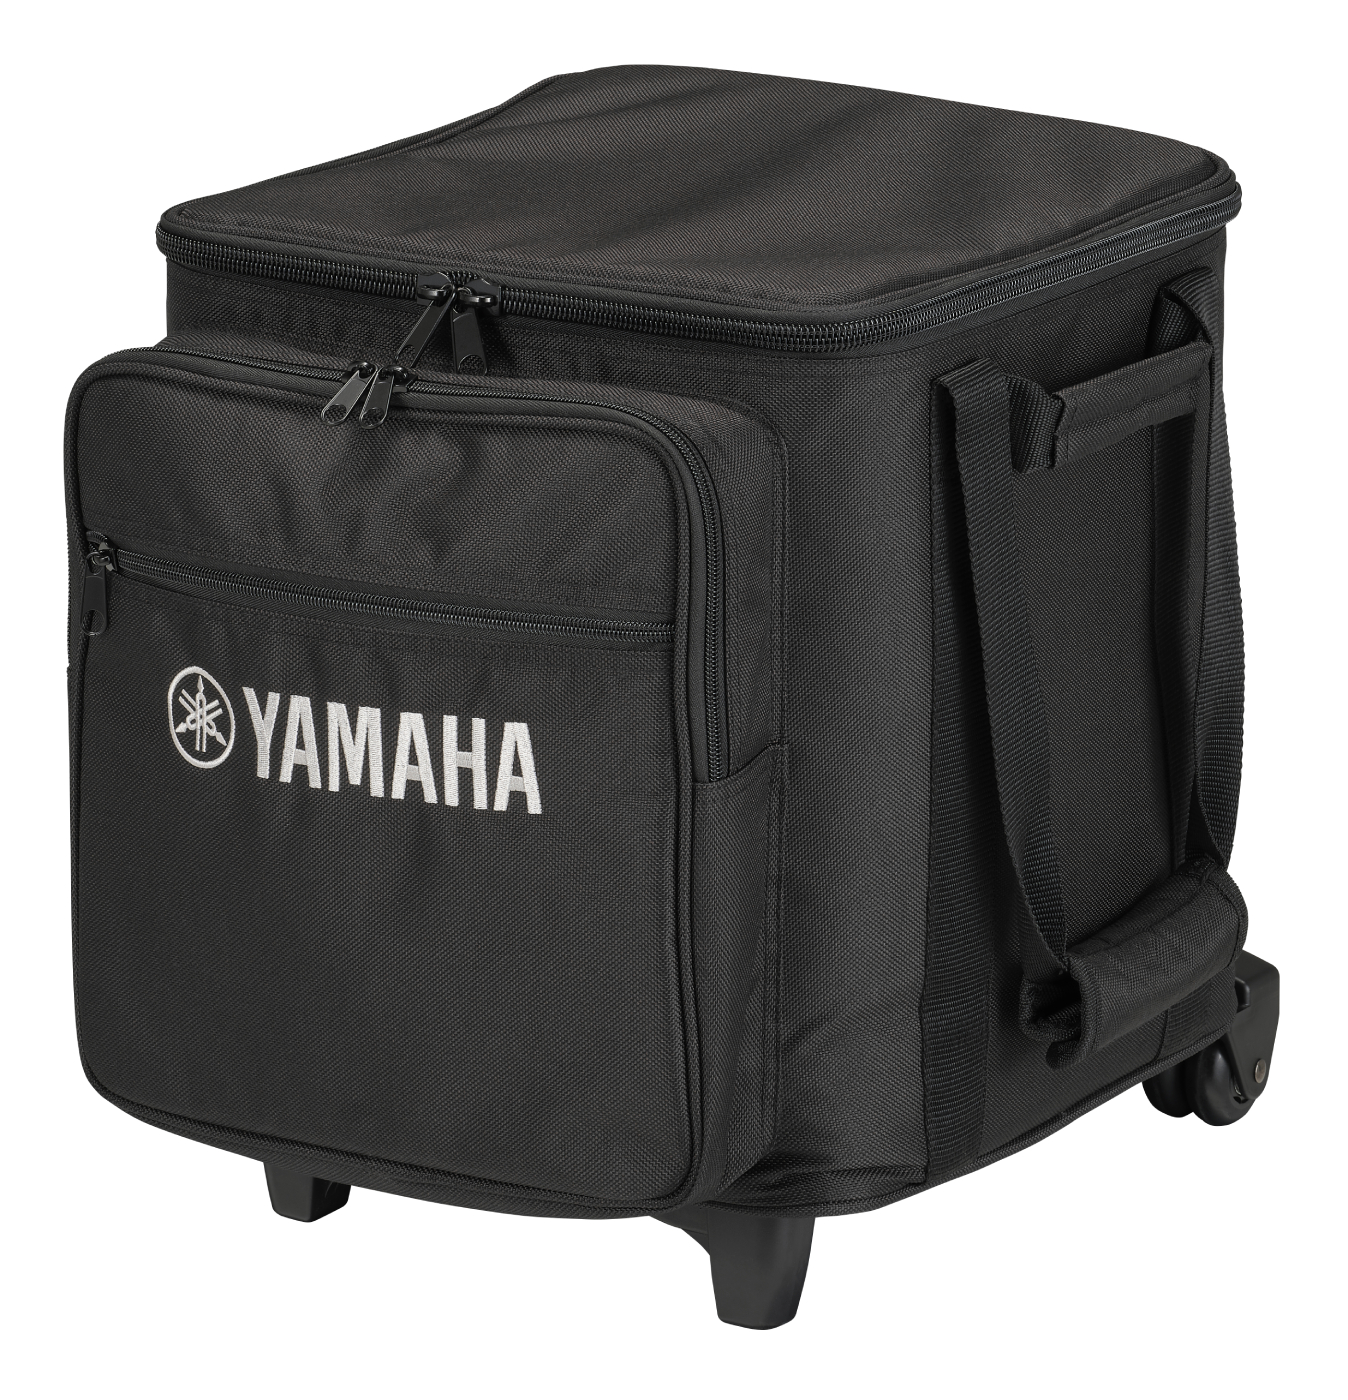 Yamaha Valise Pour Stagepas 200 - Zubehör Flight Case - Variation 2